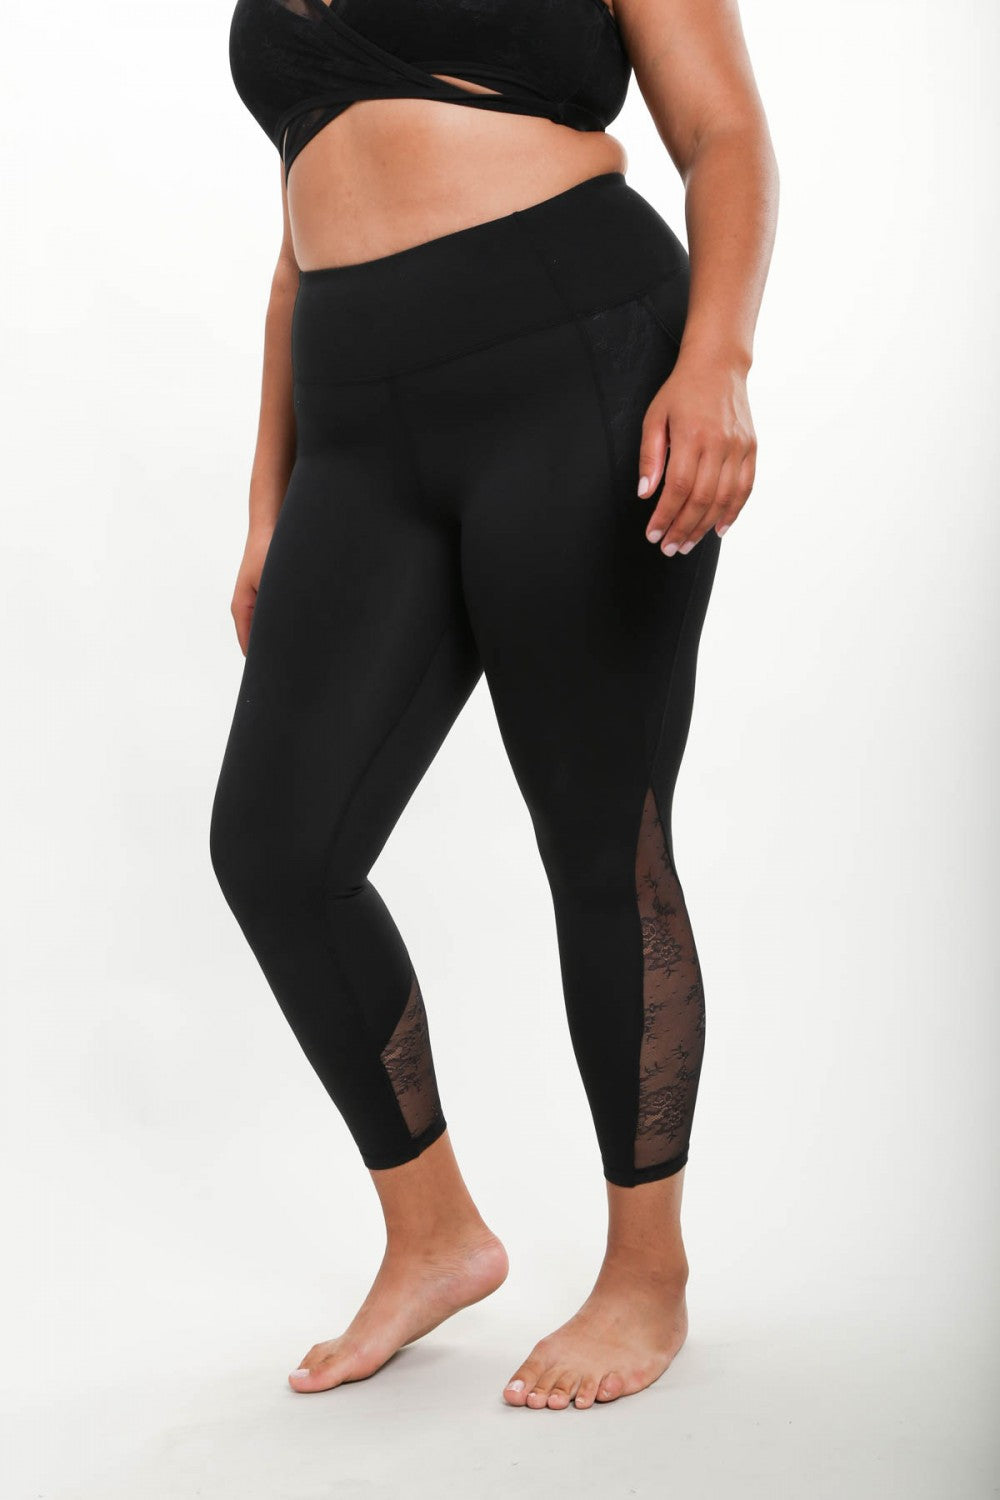 SHEIN, Pants & Jumpsuits, Shein Curve 3xl Plus Size Floral Black Mesh  Love Leggings Sports Bra